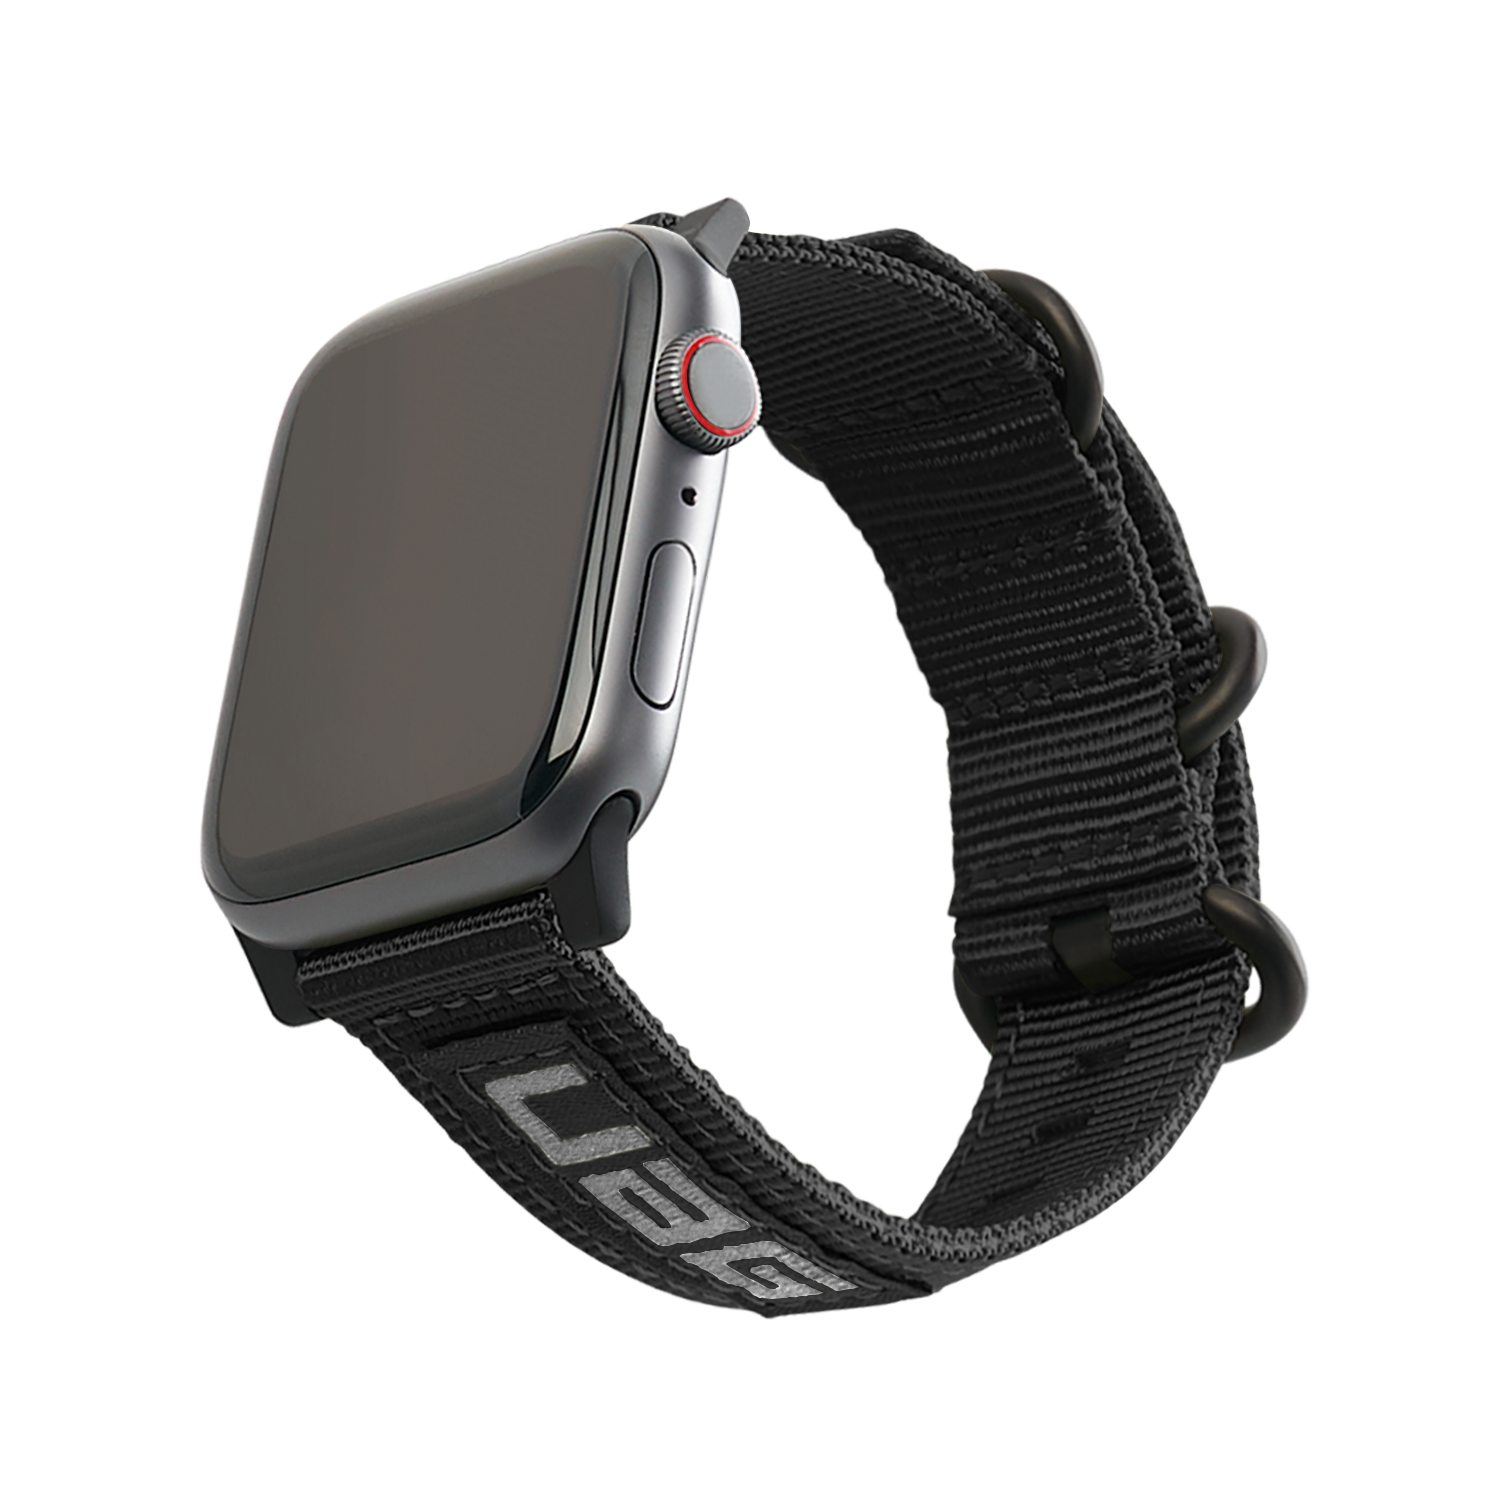 Apple Watch 42mm Nato Eco Strap Black